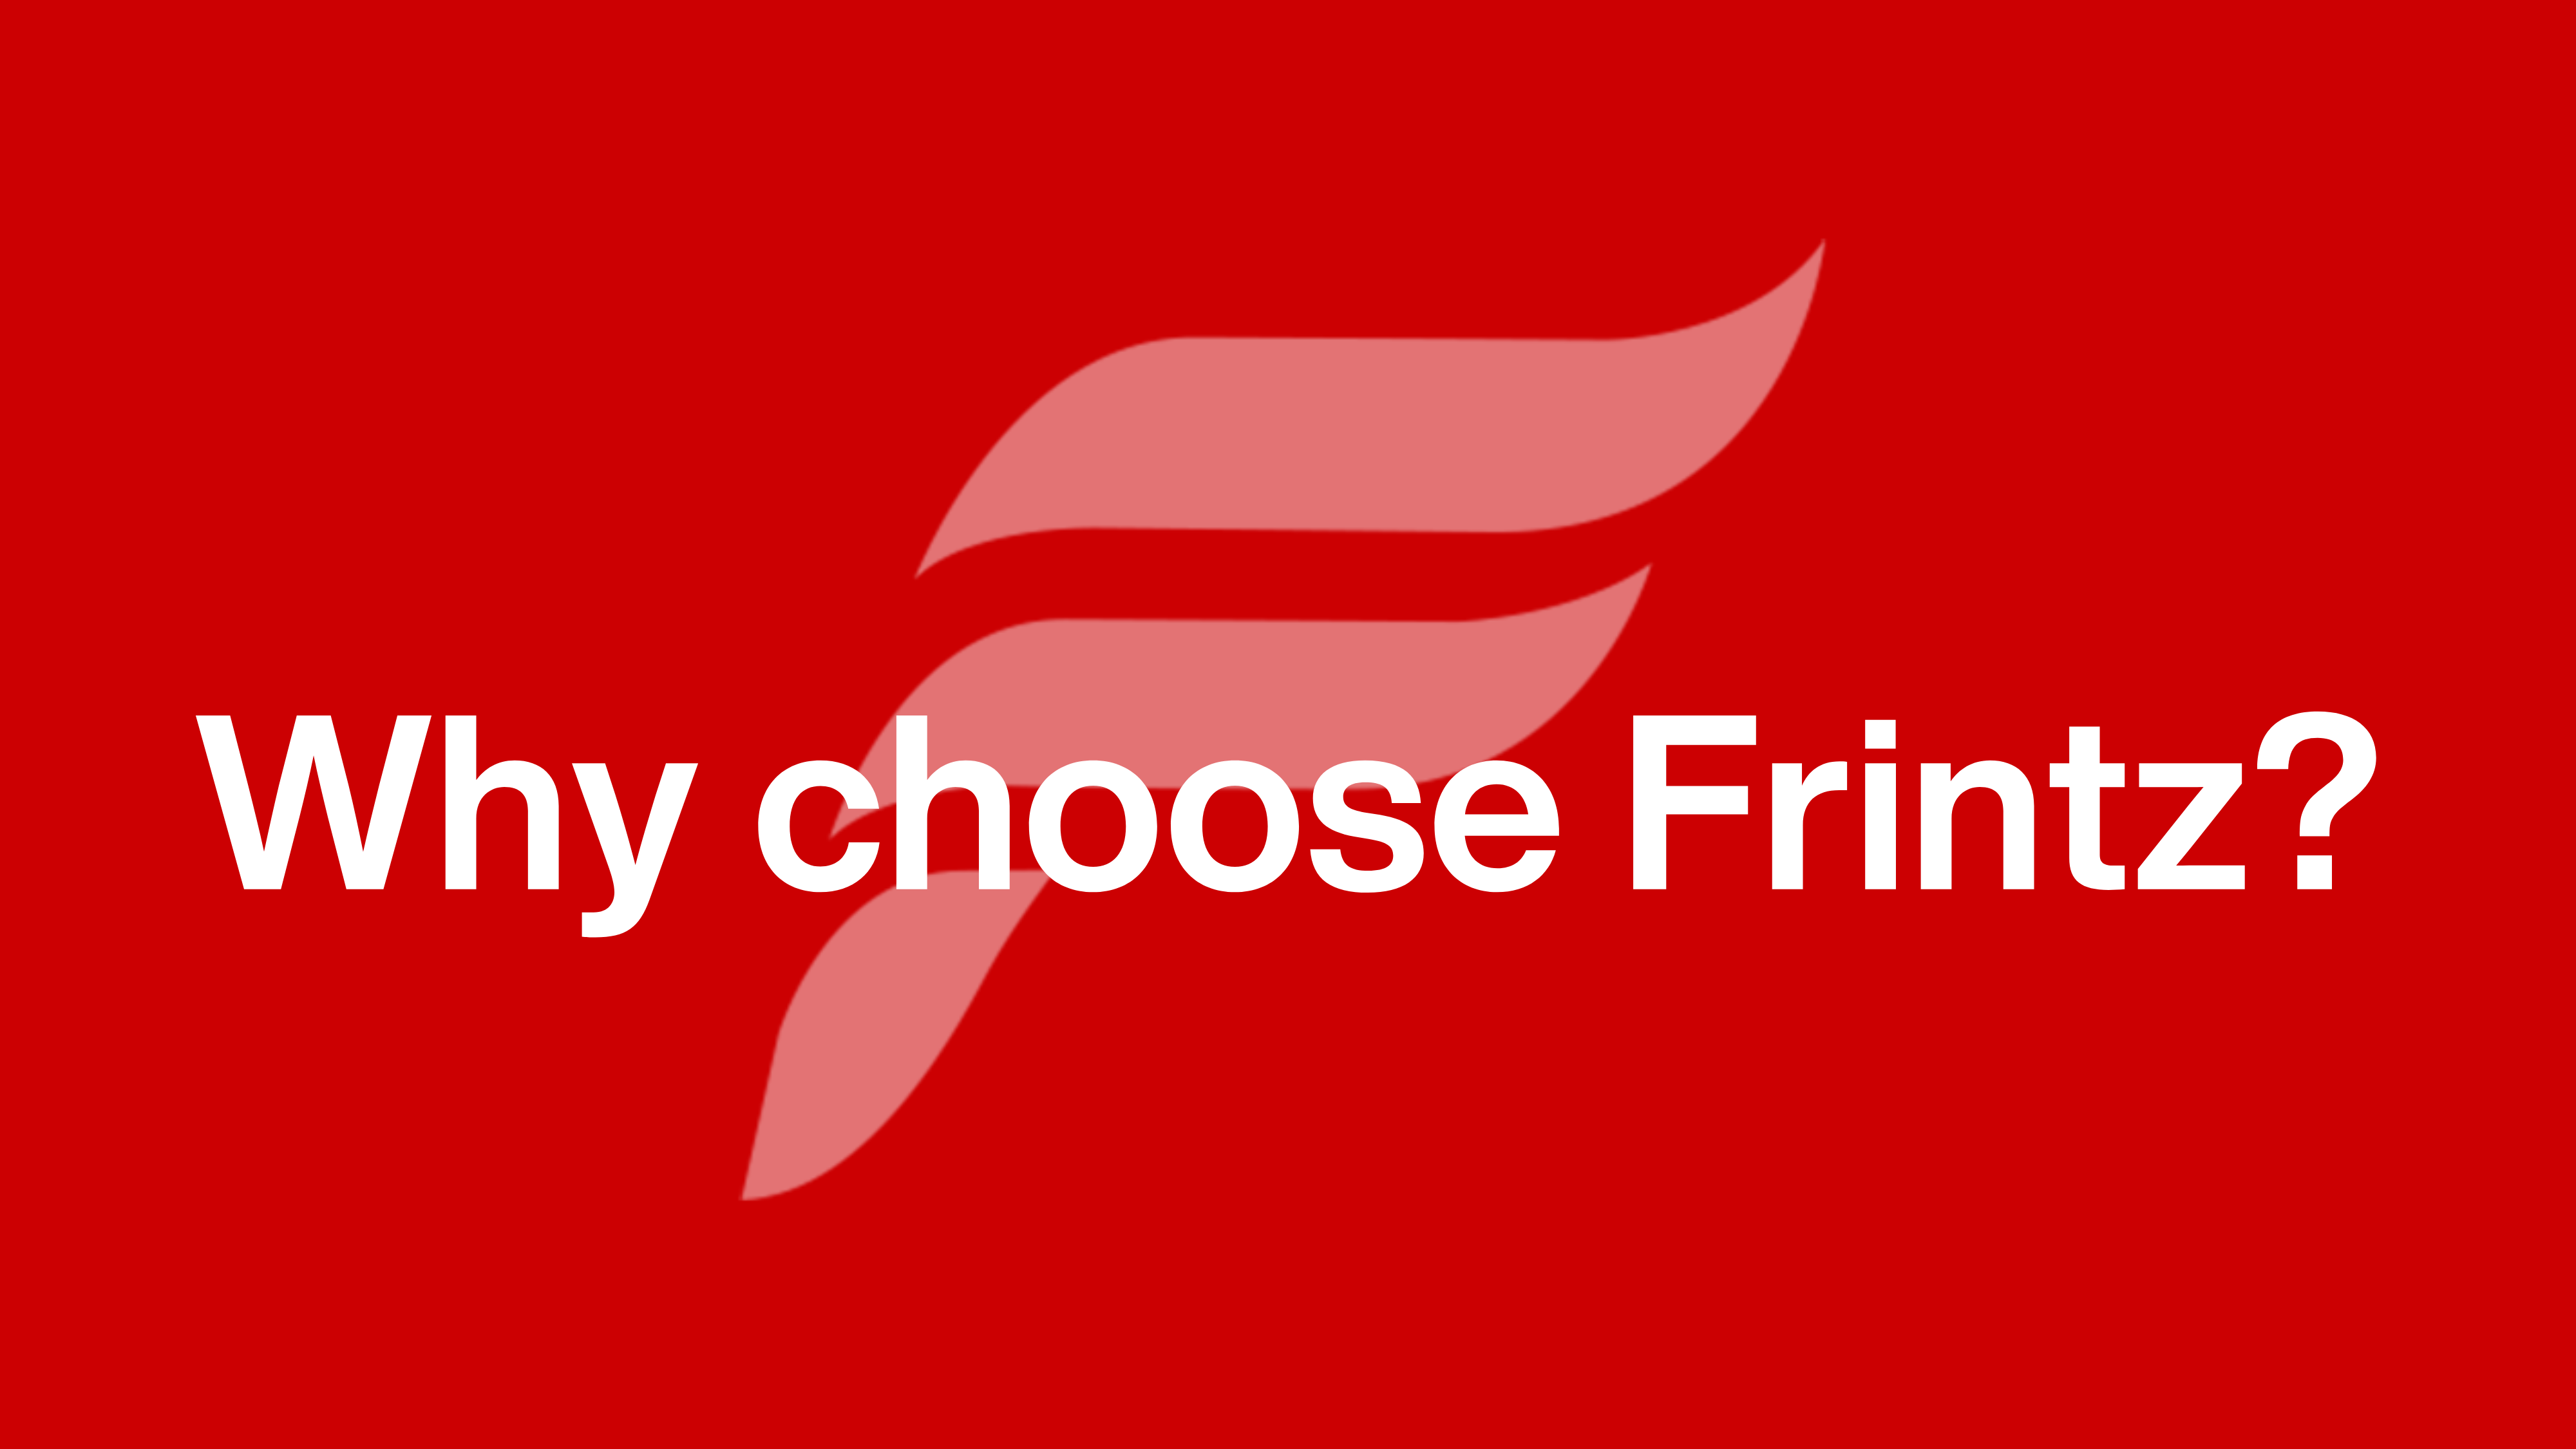 Why choose Frintz?